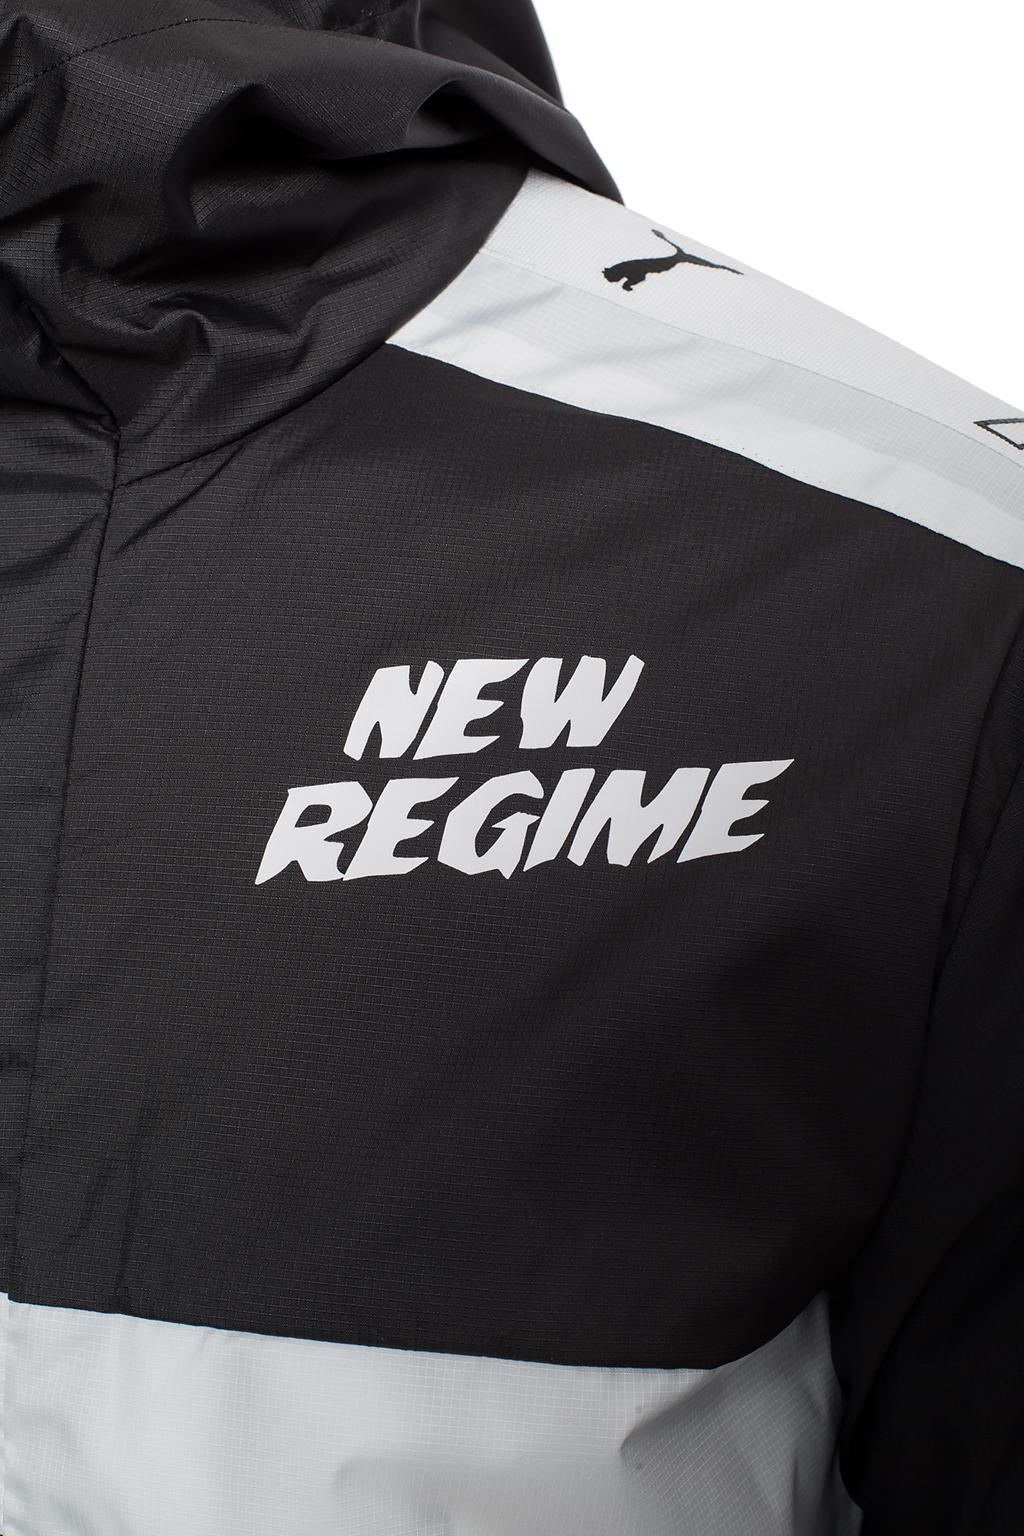 puma new regime jacket